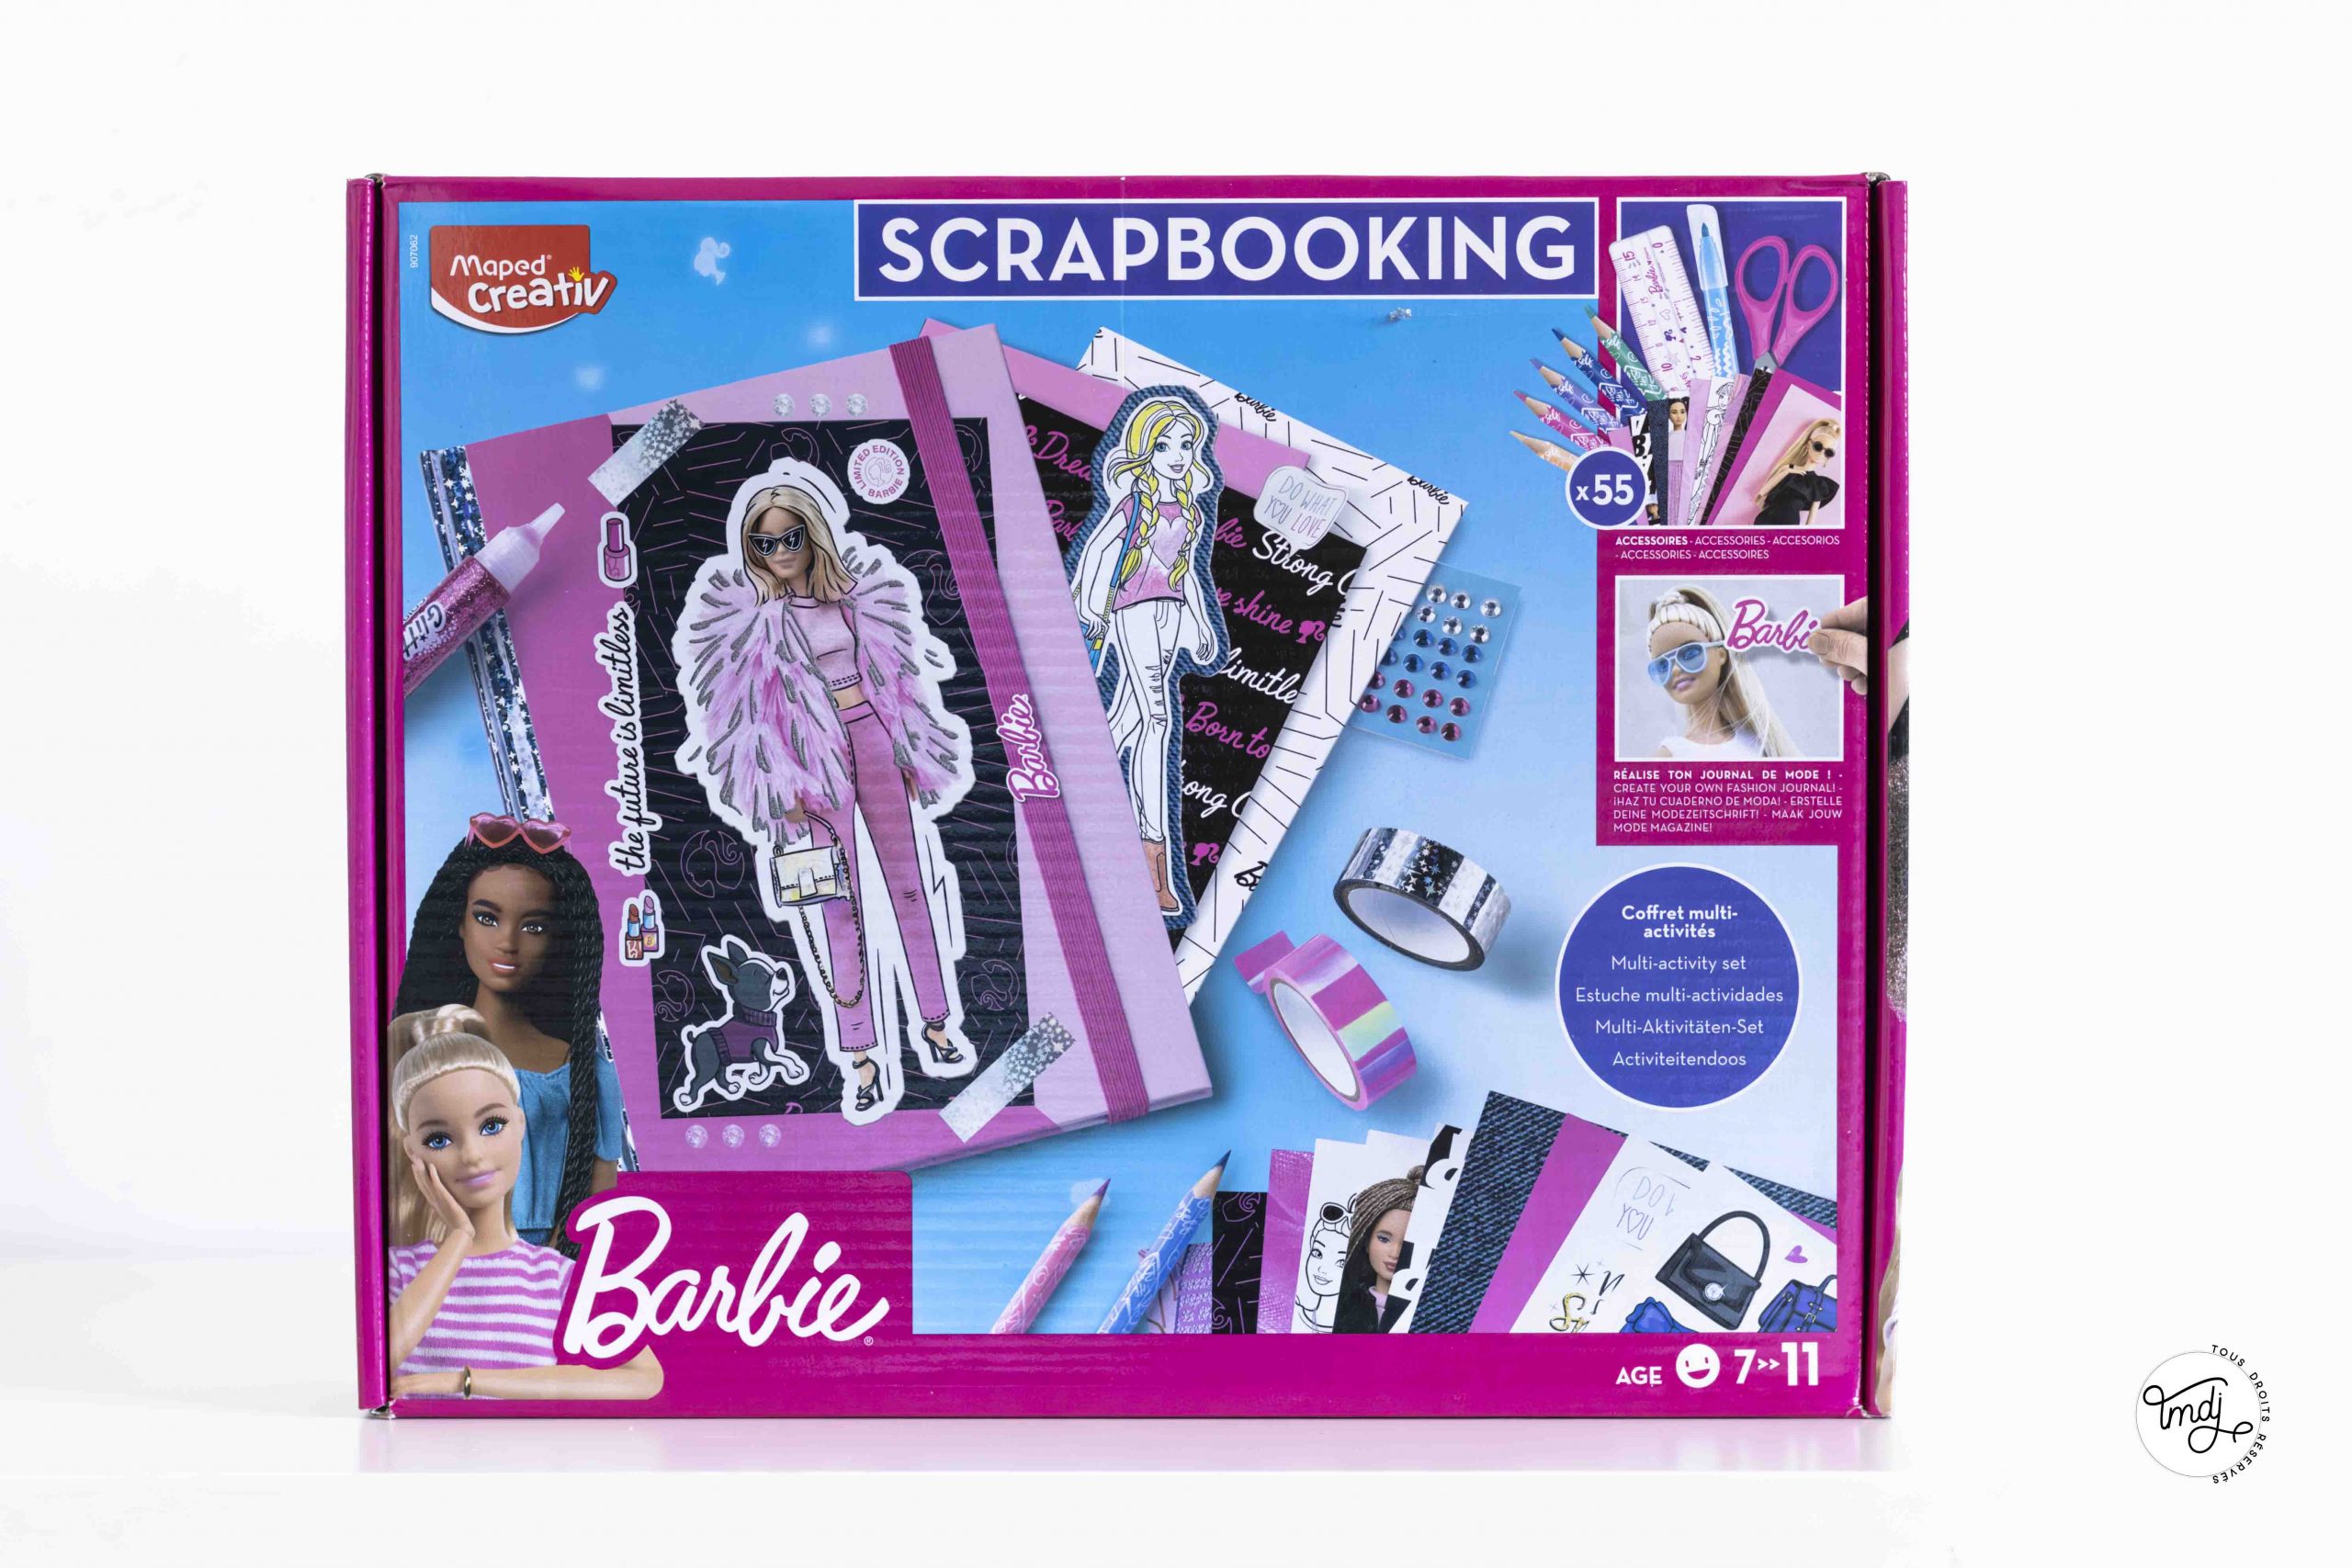 Coffret scrapbooking Barbie de Maped